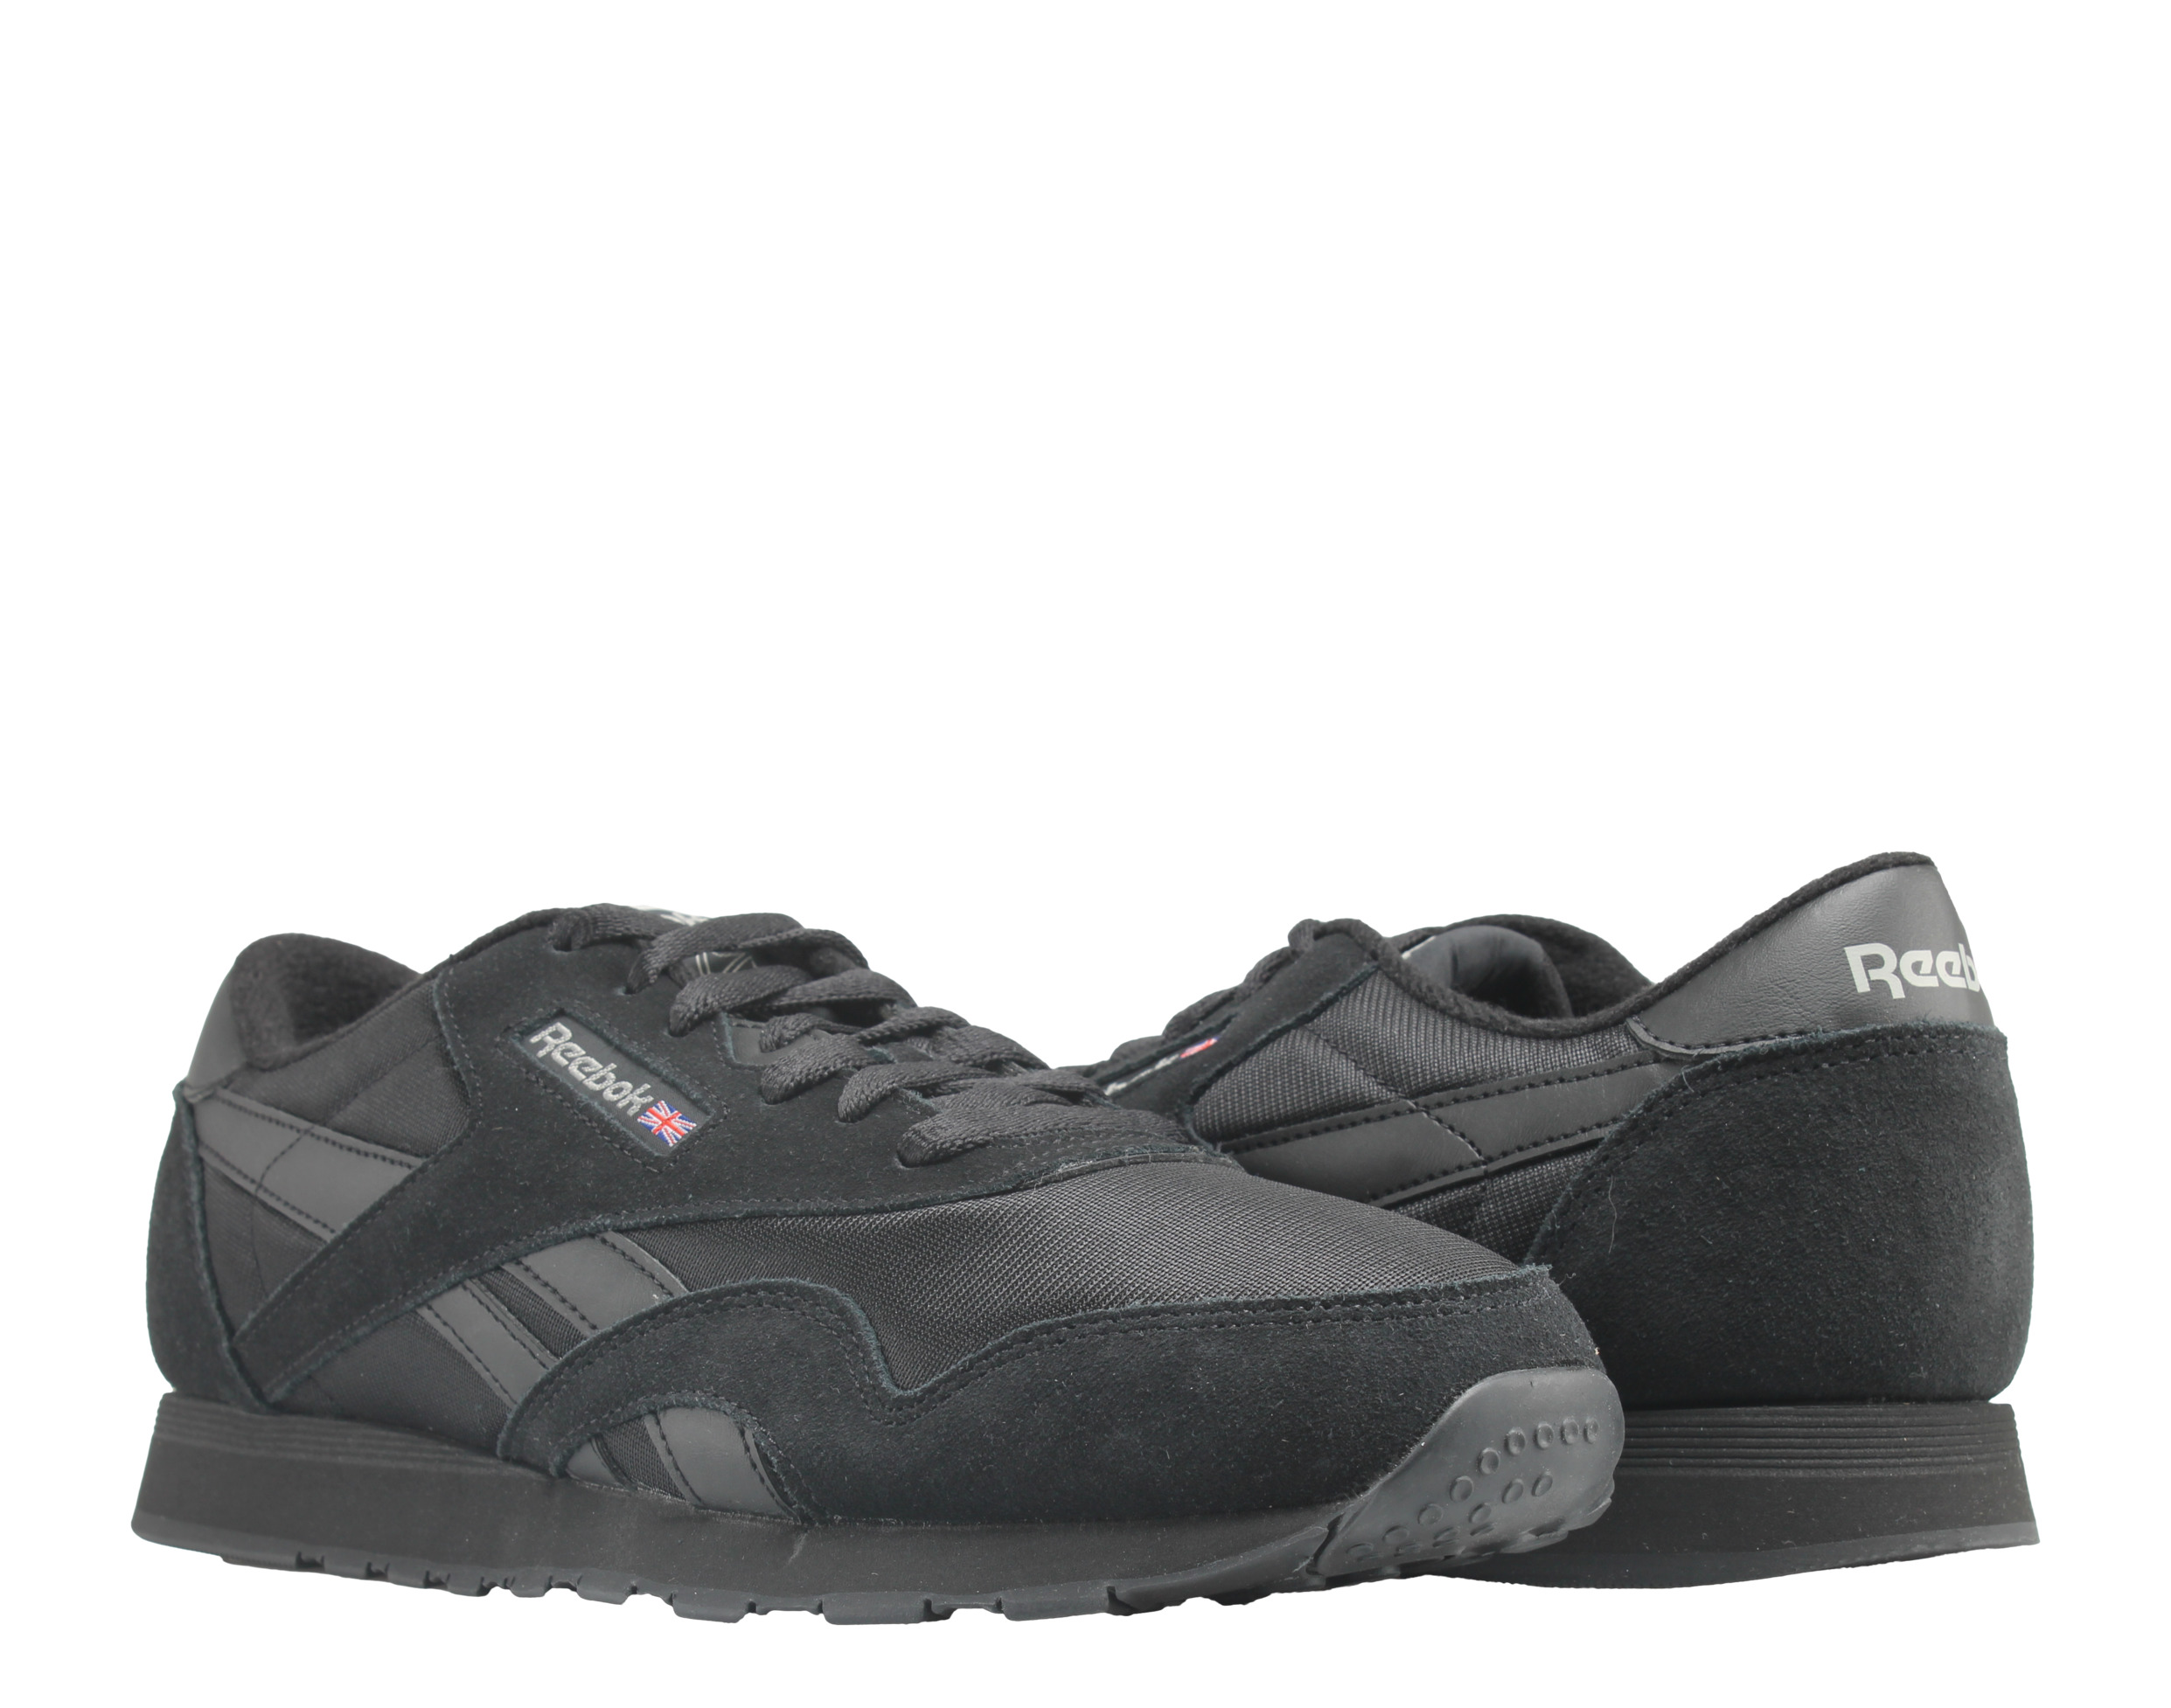 Reebok Classic Nylon Men's Running Shoes Size 11 - image 1 of 6